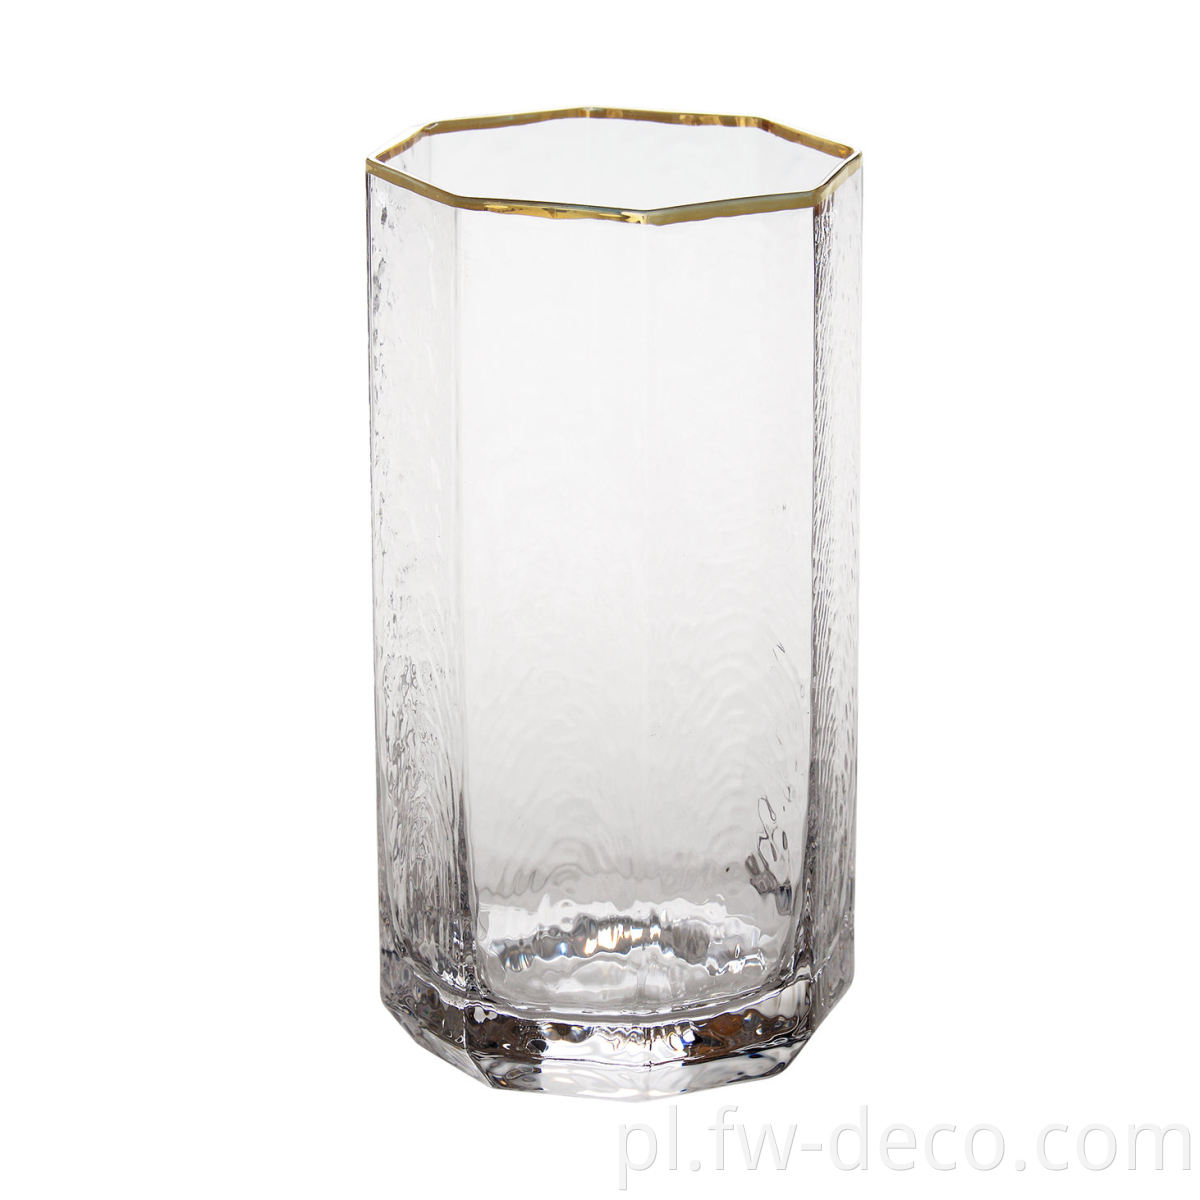 hiball drinking glass